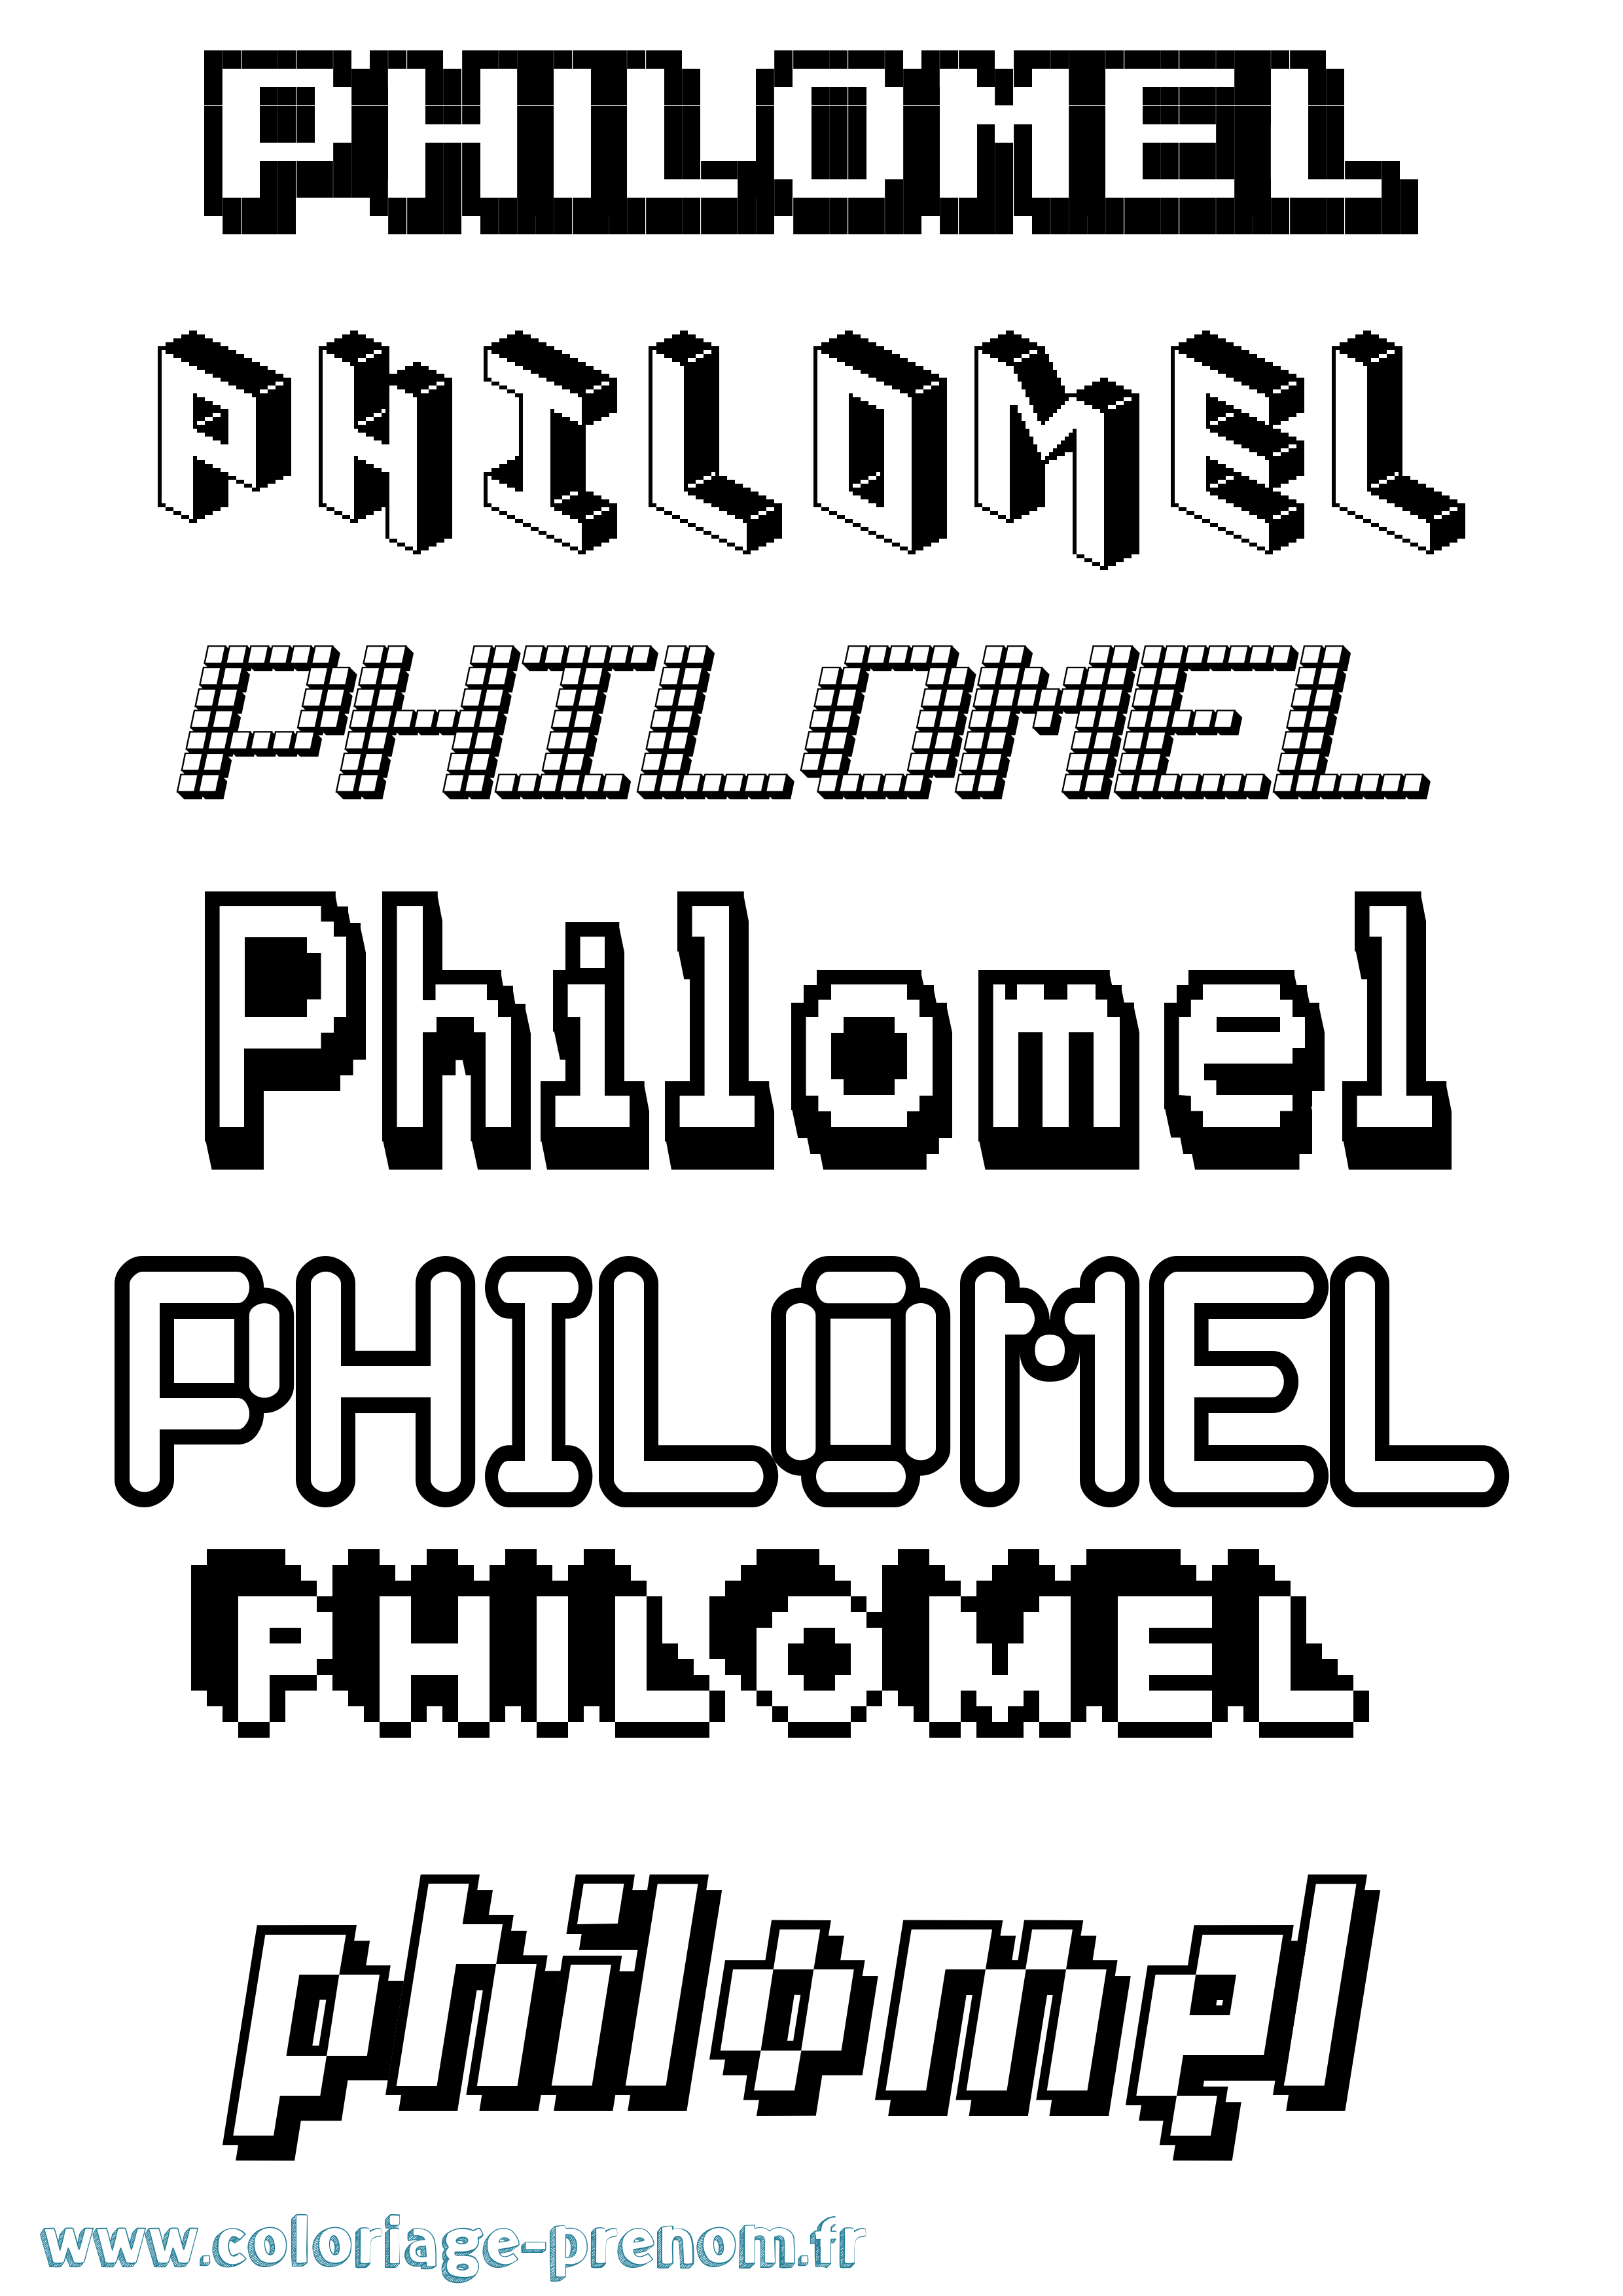 Coloriage prénom Philomel Pixel